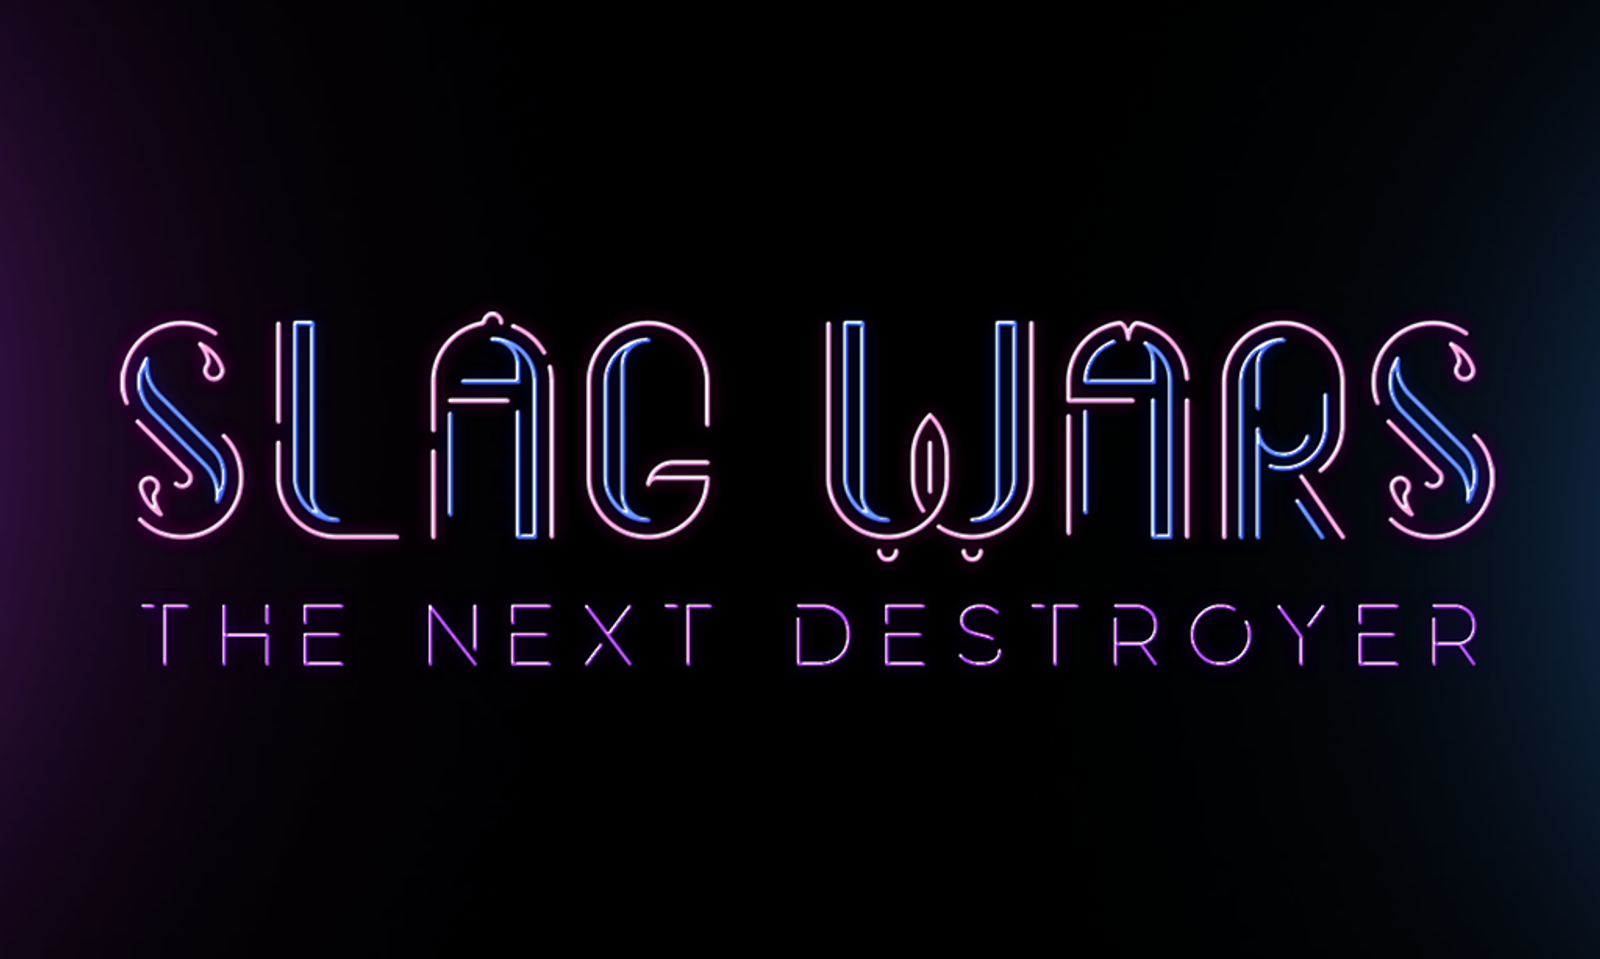 Men.com to Offer Its First Mainstream Reality Show 'Slag Wars'